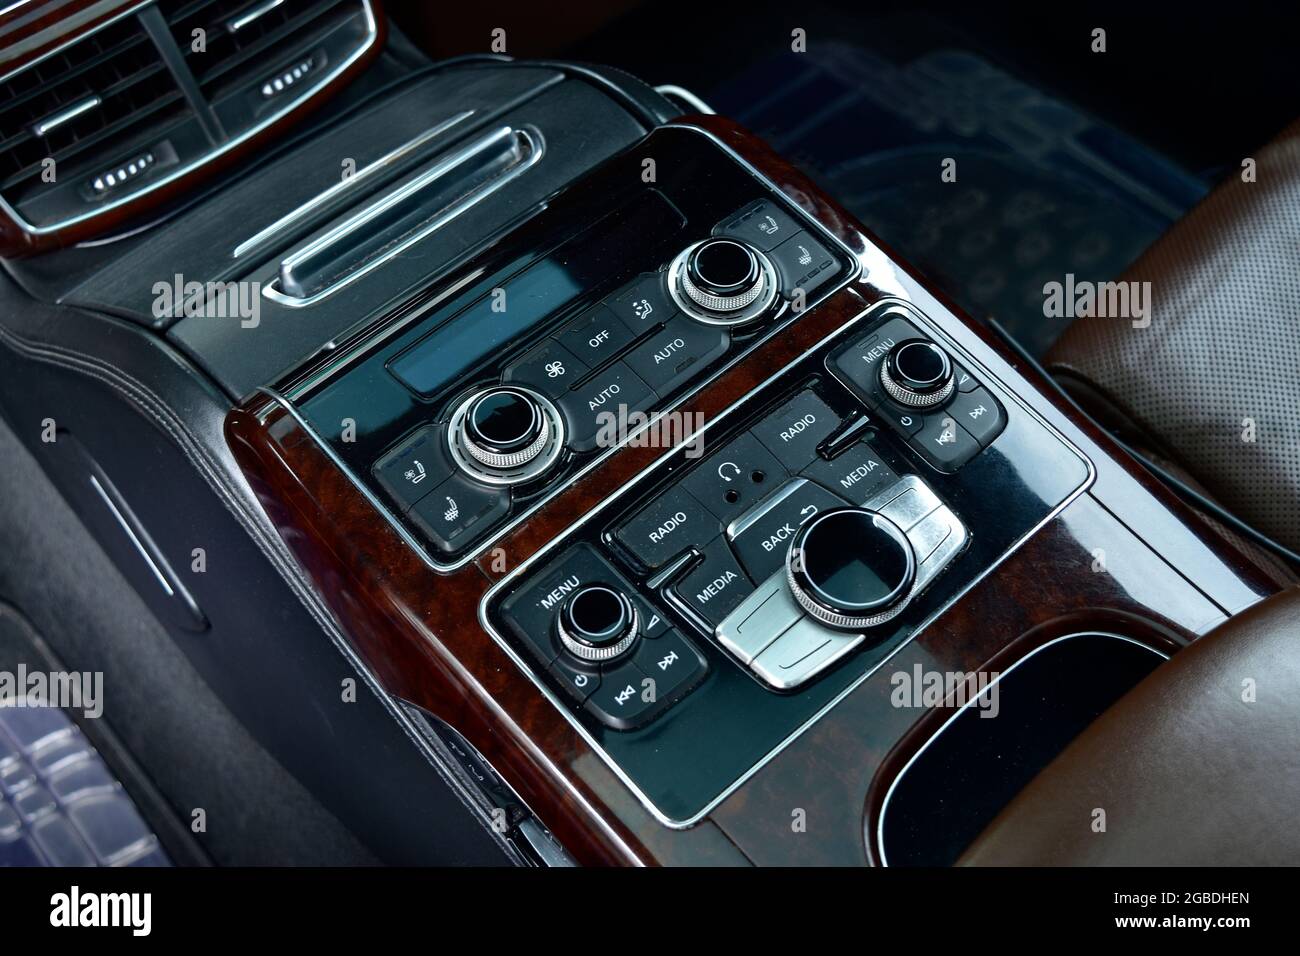 Music Controller Of luxury car, Car Cruise Controller Stock Photo